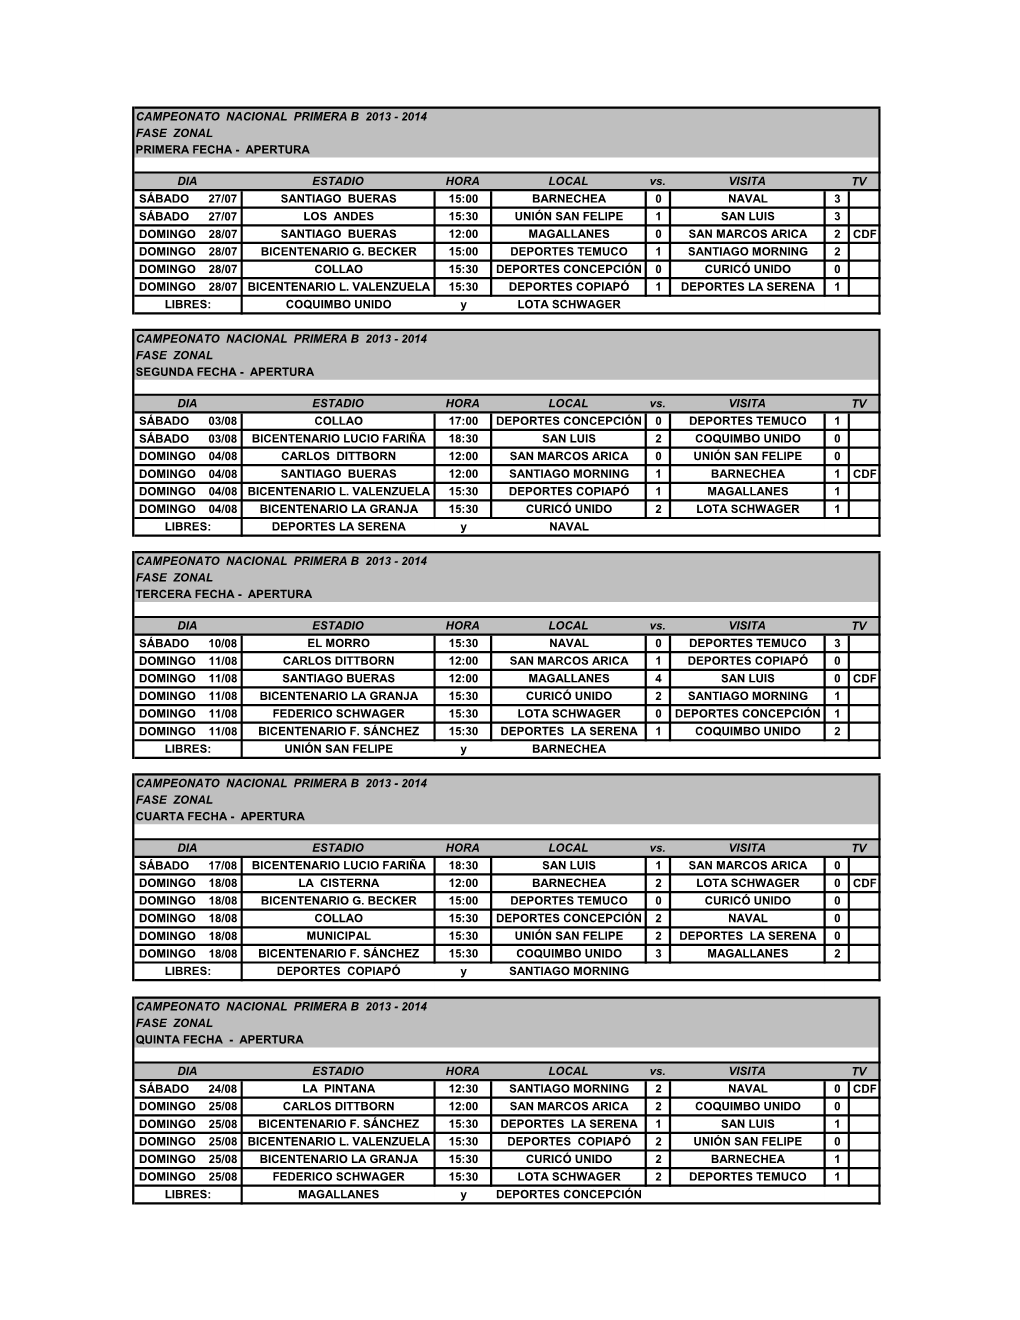 Campeonato Nacional Primera B 2013 - 2014 Fase Zonal Primera Fecha - Apertura